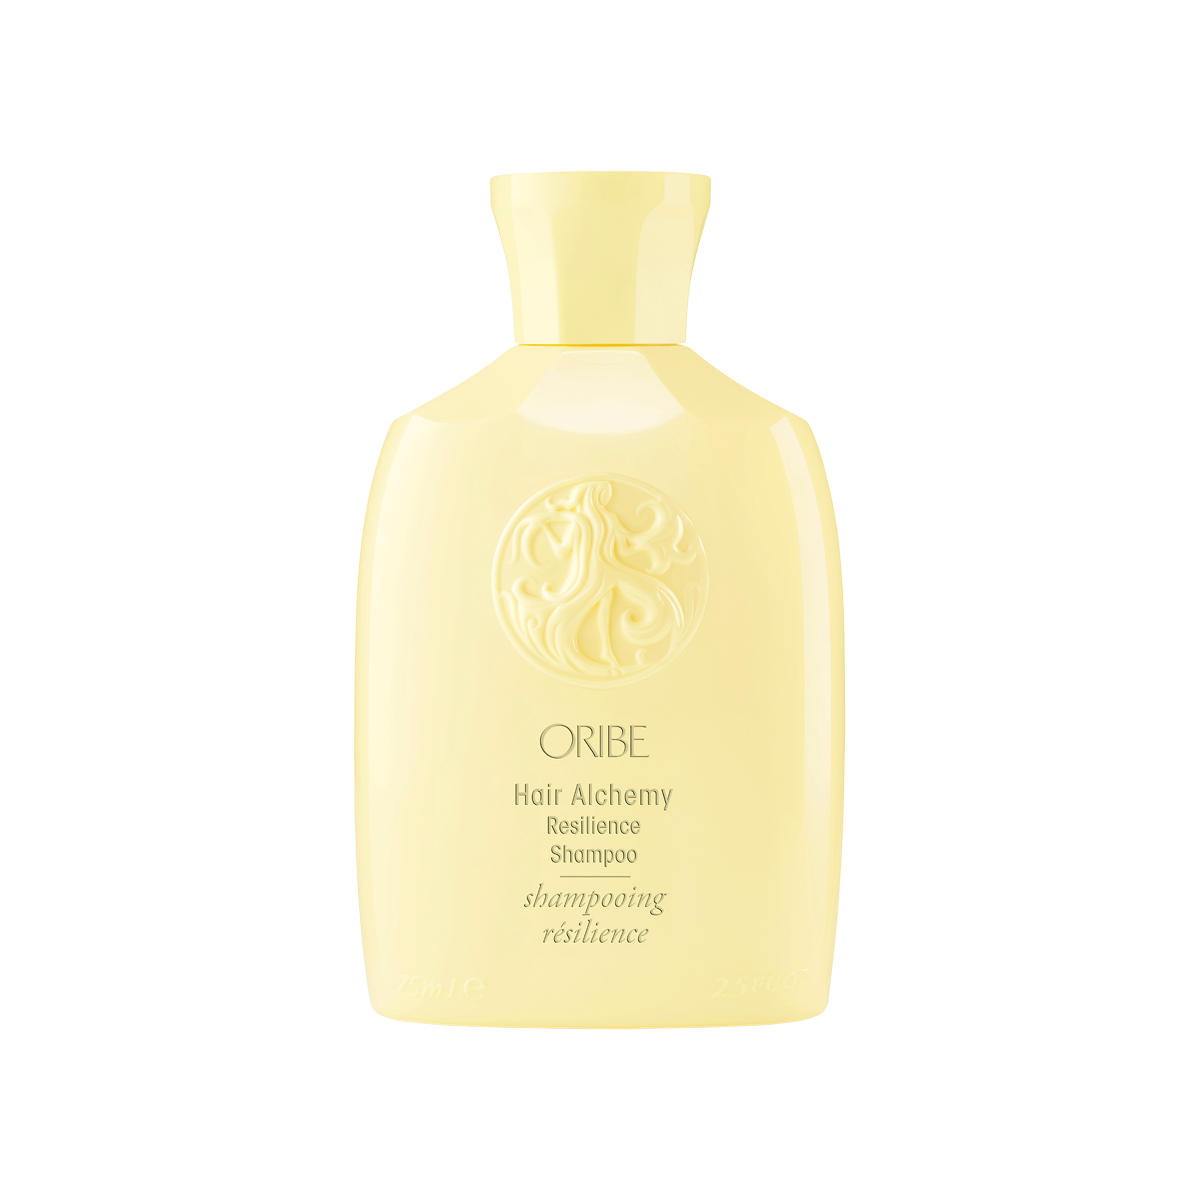 Oribe - Hair Alchemy Shampoo Travel